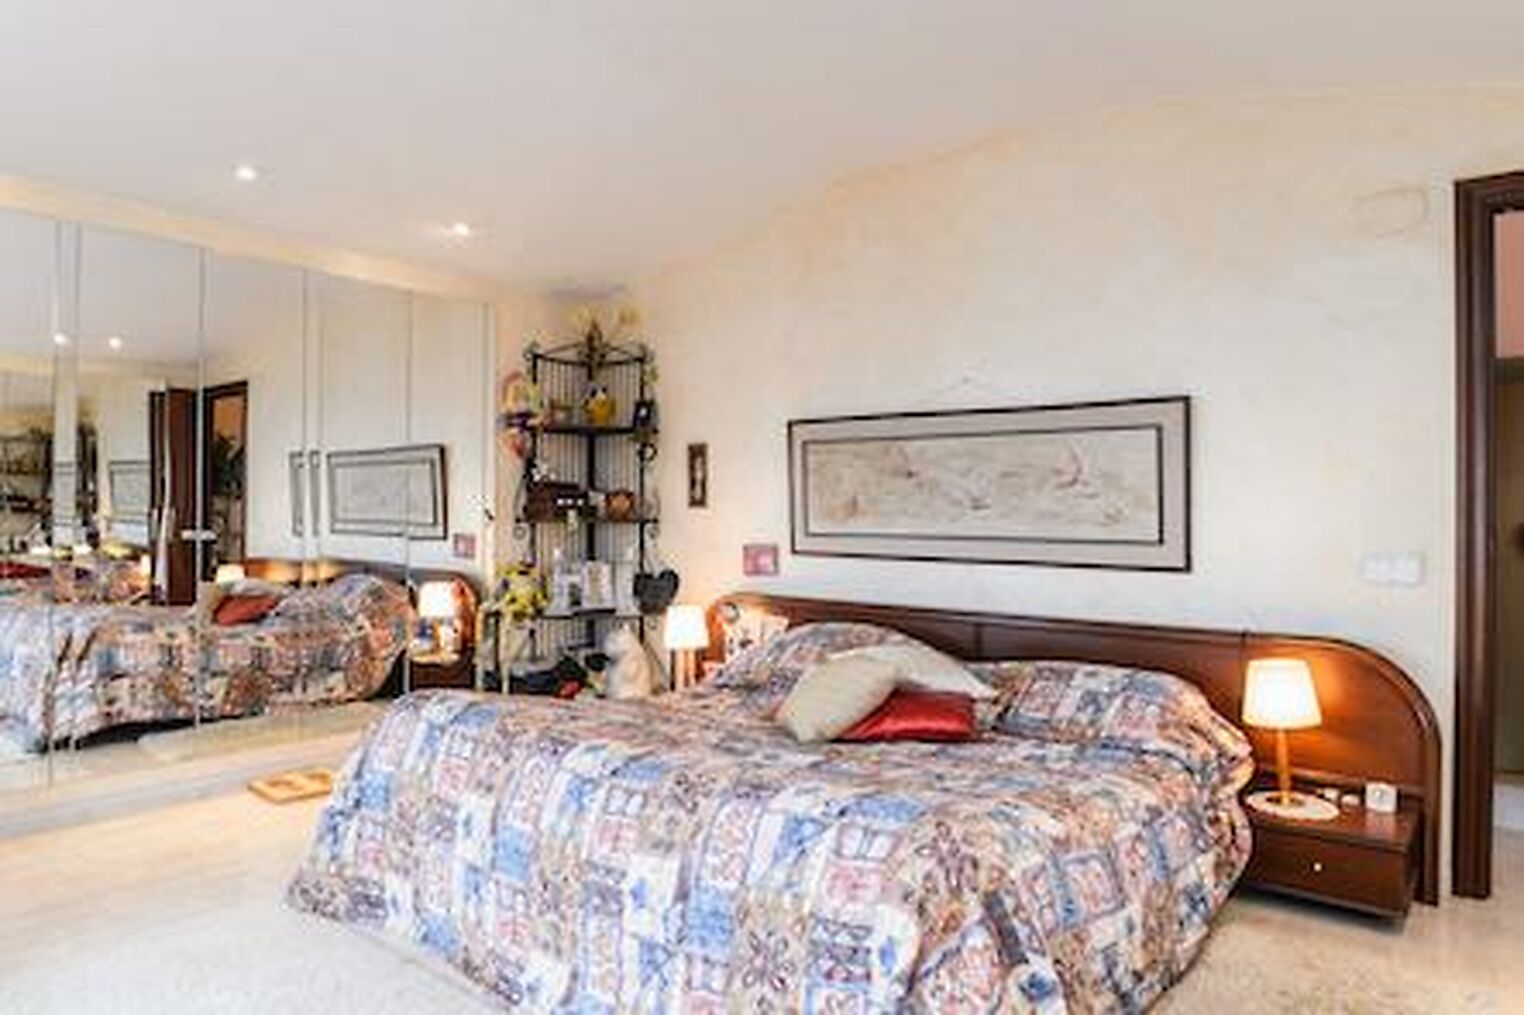 Stunning 3 bedroom villa for sale in Playa de Aro with incredible sea views.